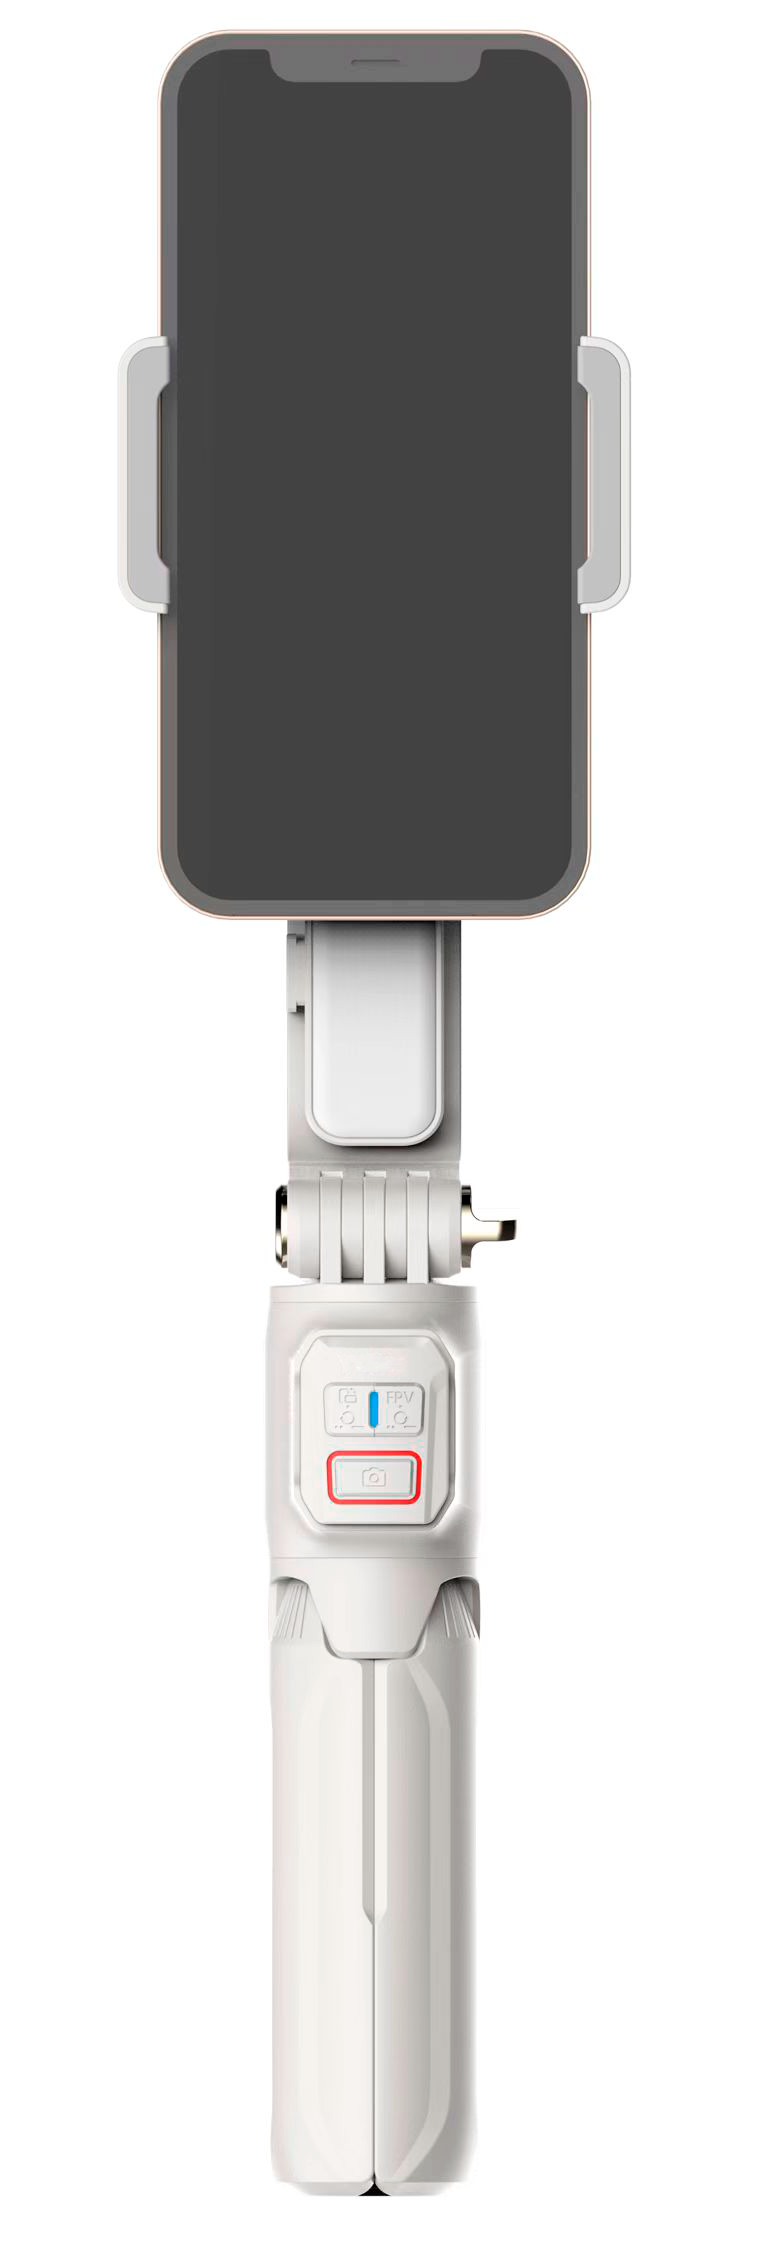 Стабилизатор для смартфона GimbalPro A10 White GimbalPro